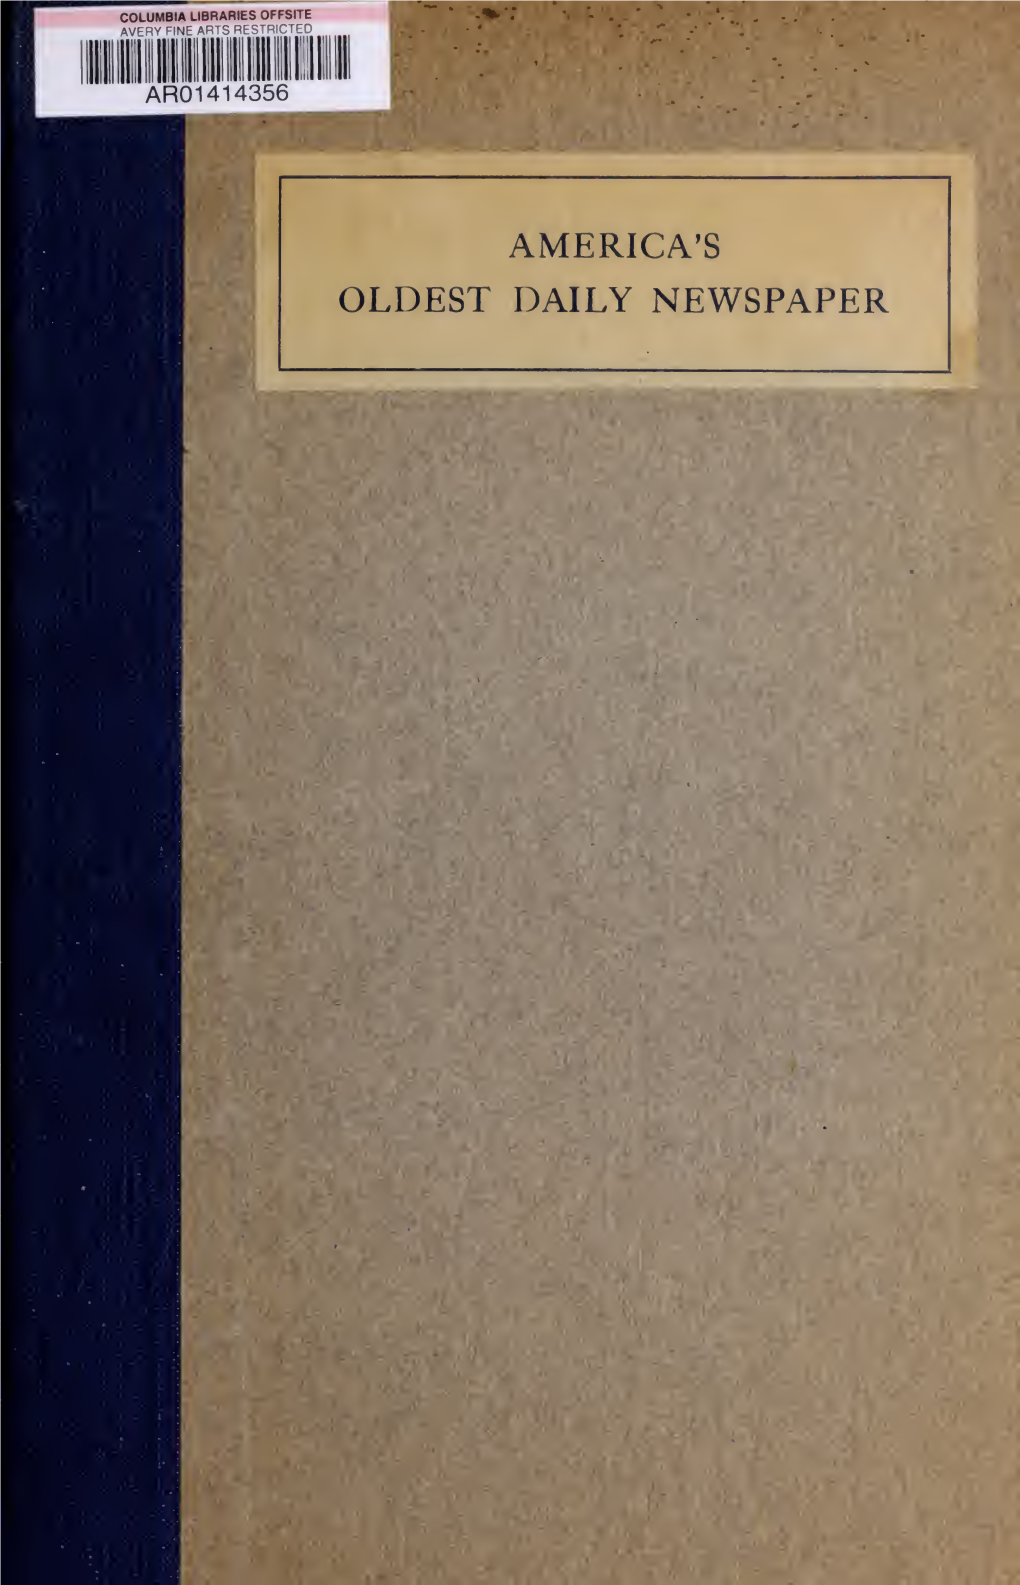 America's Oldest Daily Newspaper. the New York Globe